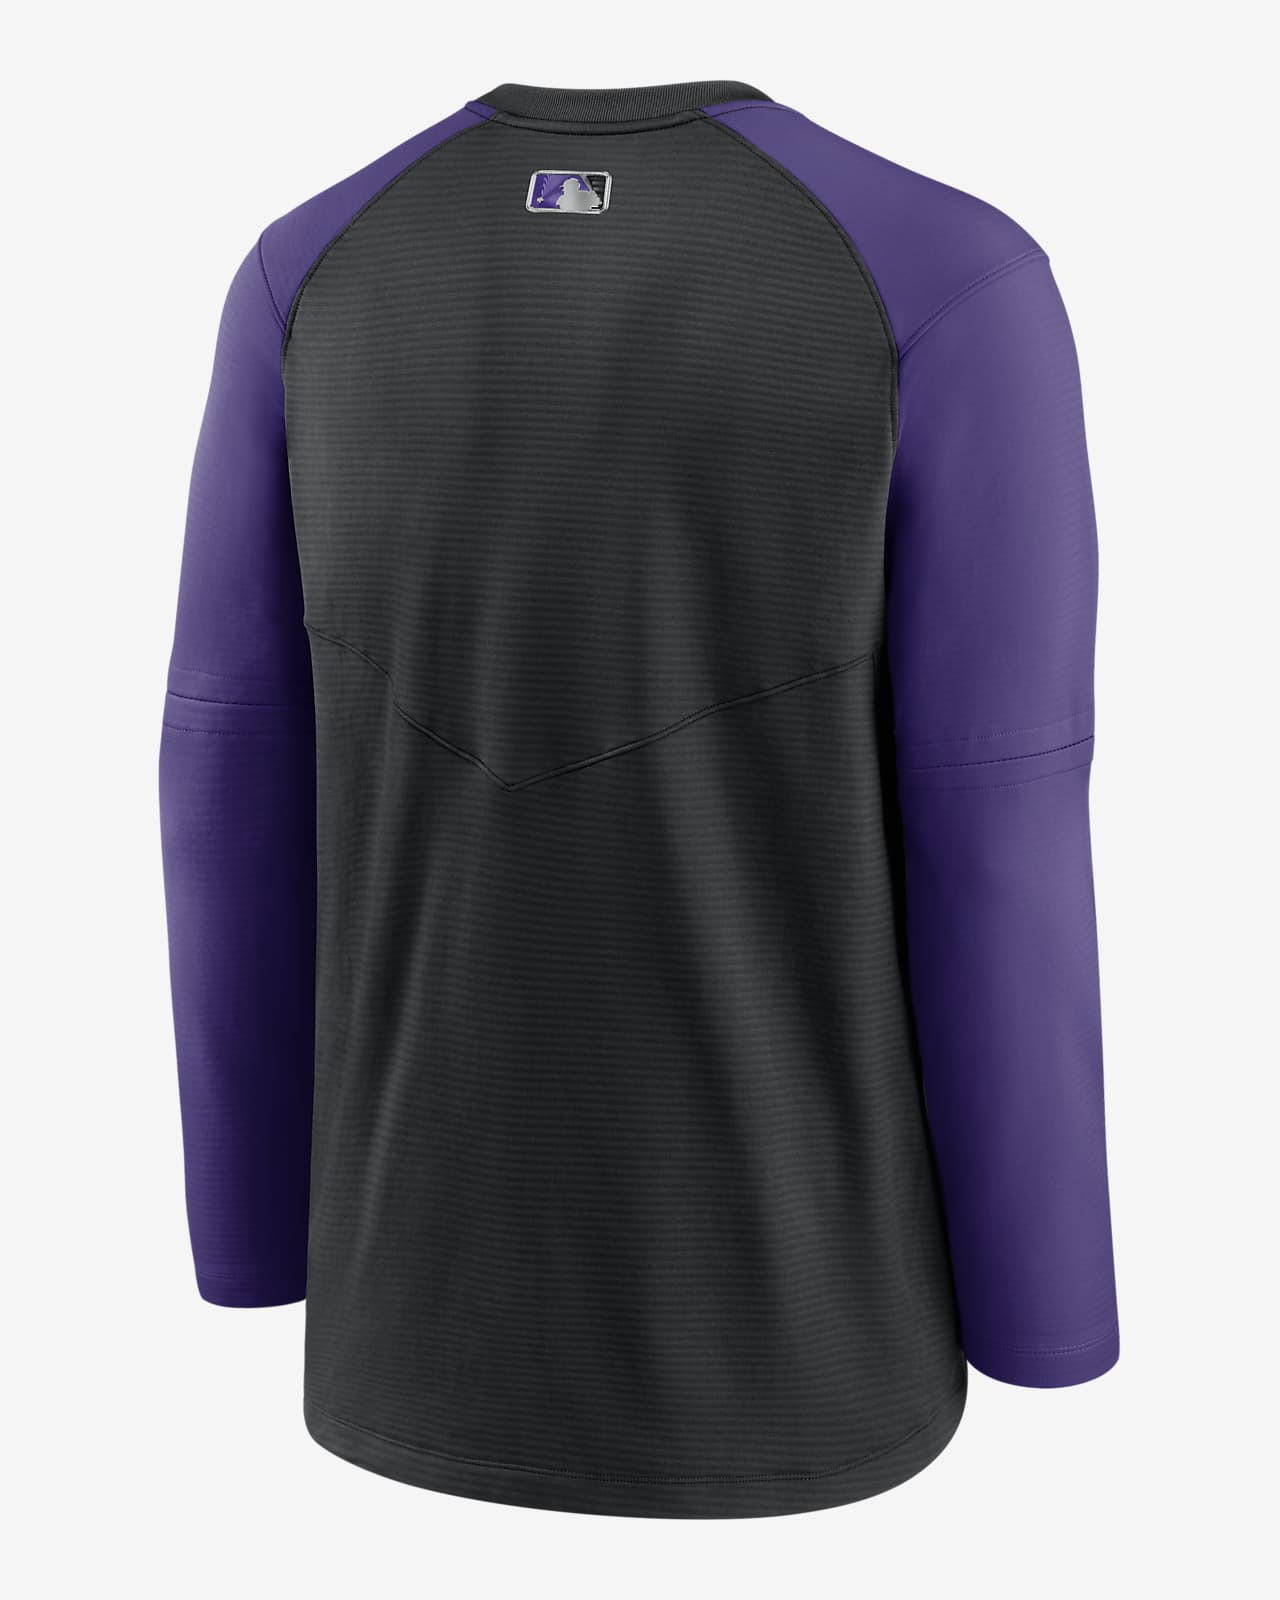 Nike Dri-FIT Pregame (MLB Colorado Rockies) Men's Long-Sleeve Top